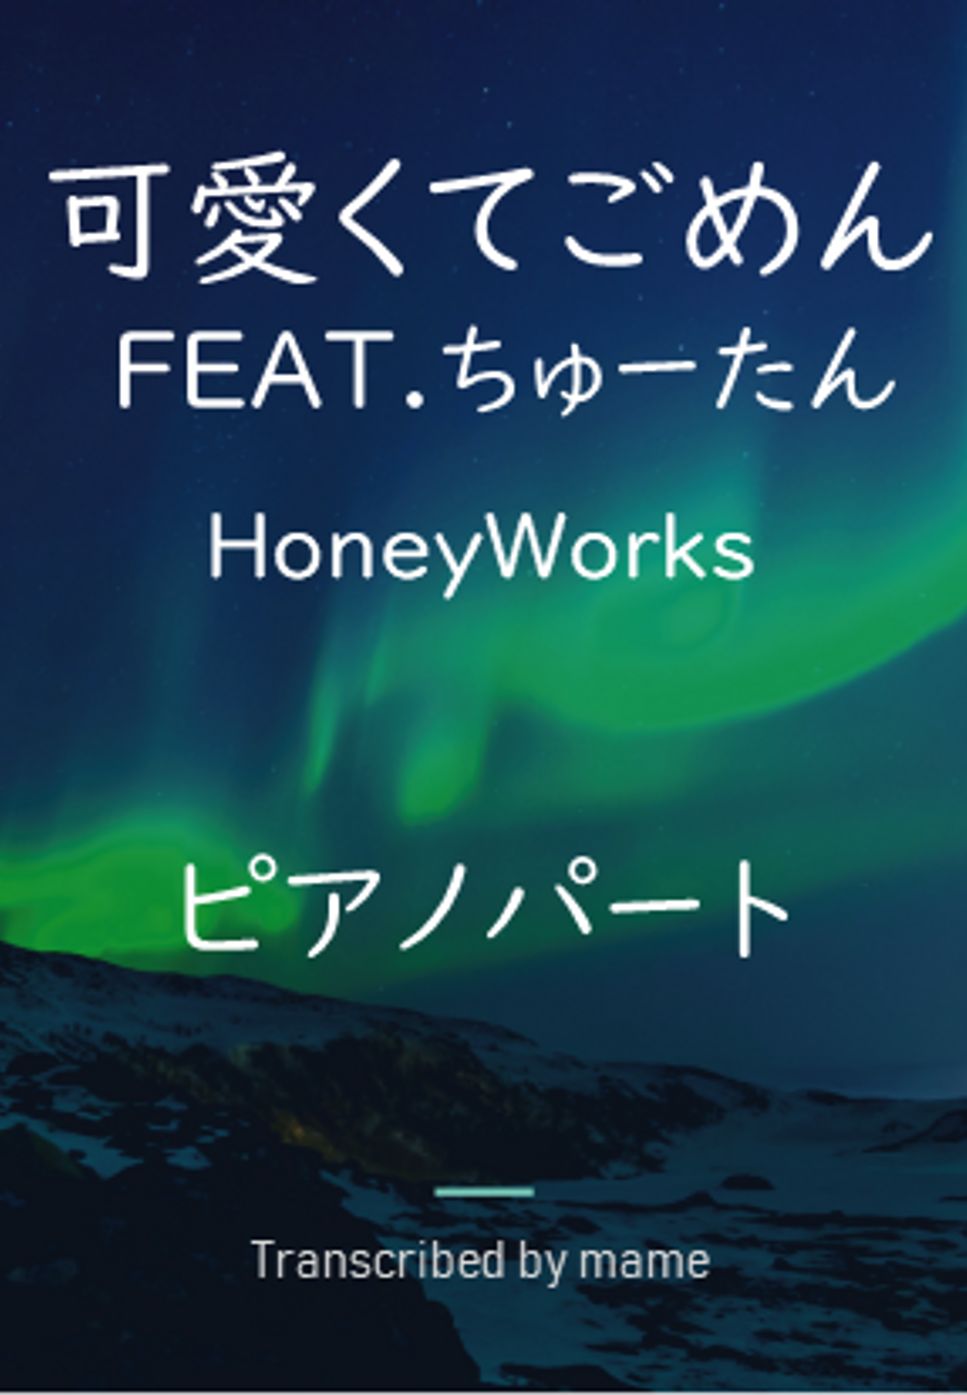 HoneyWorks - 可愛くてごめん FEAT.ちゅーたん (piano part) by mame